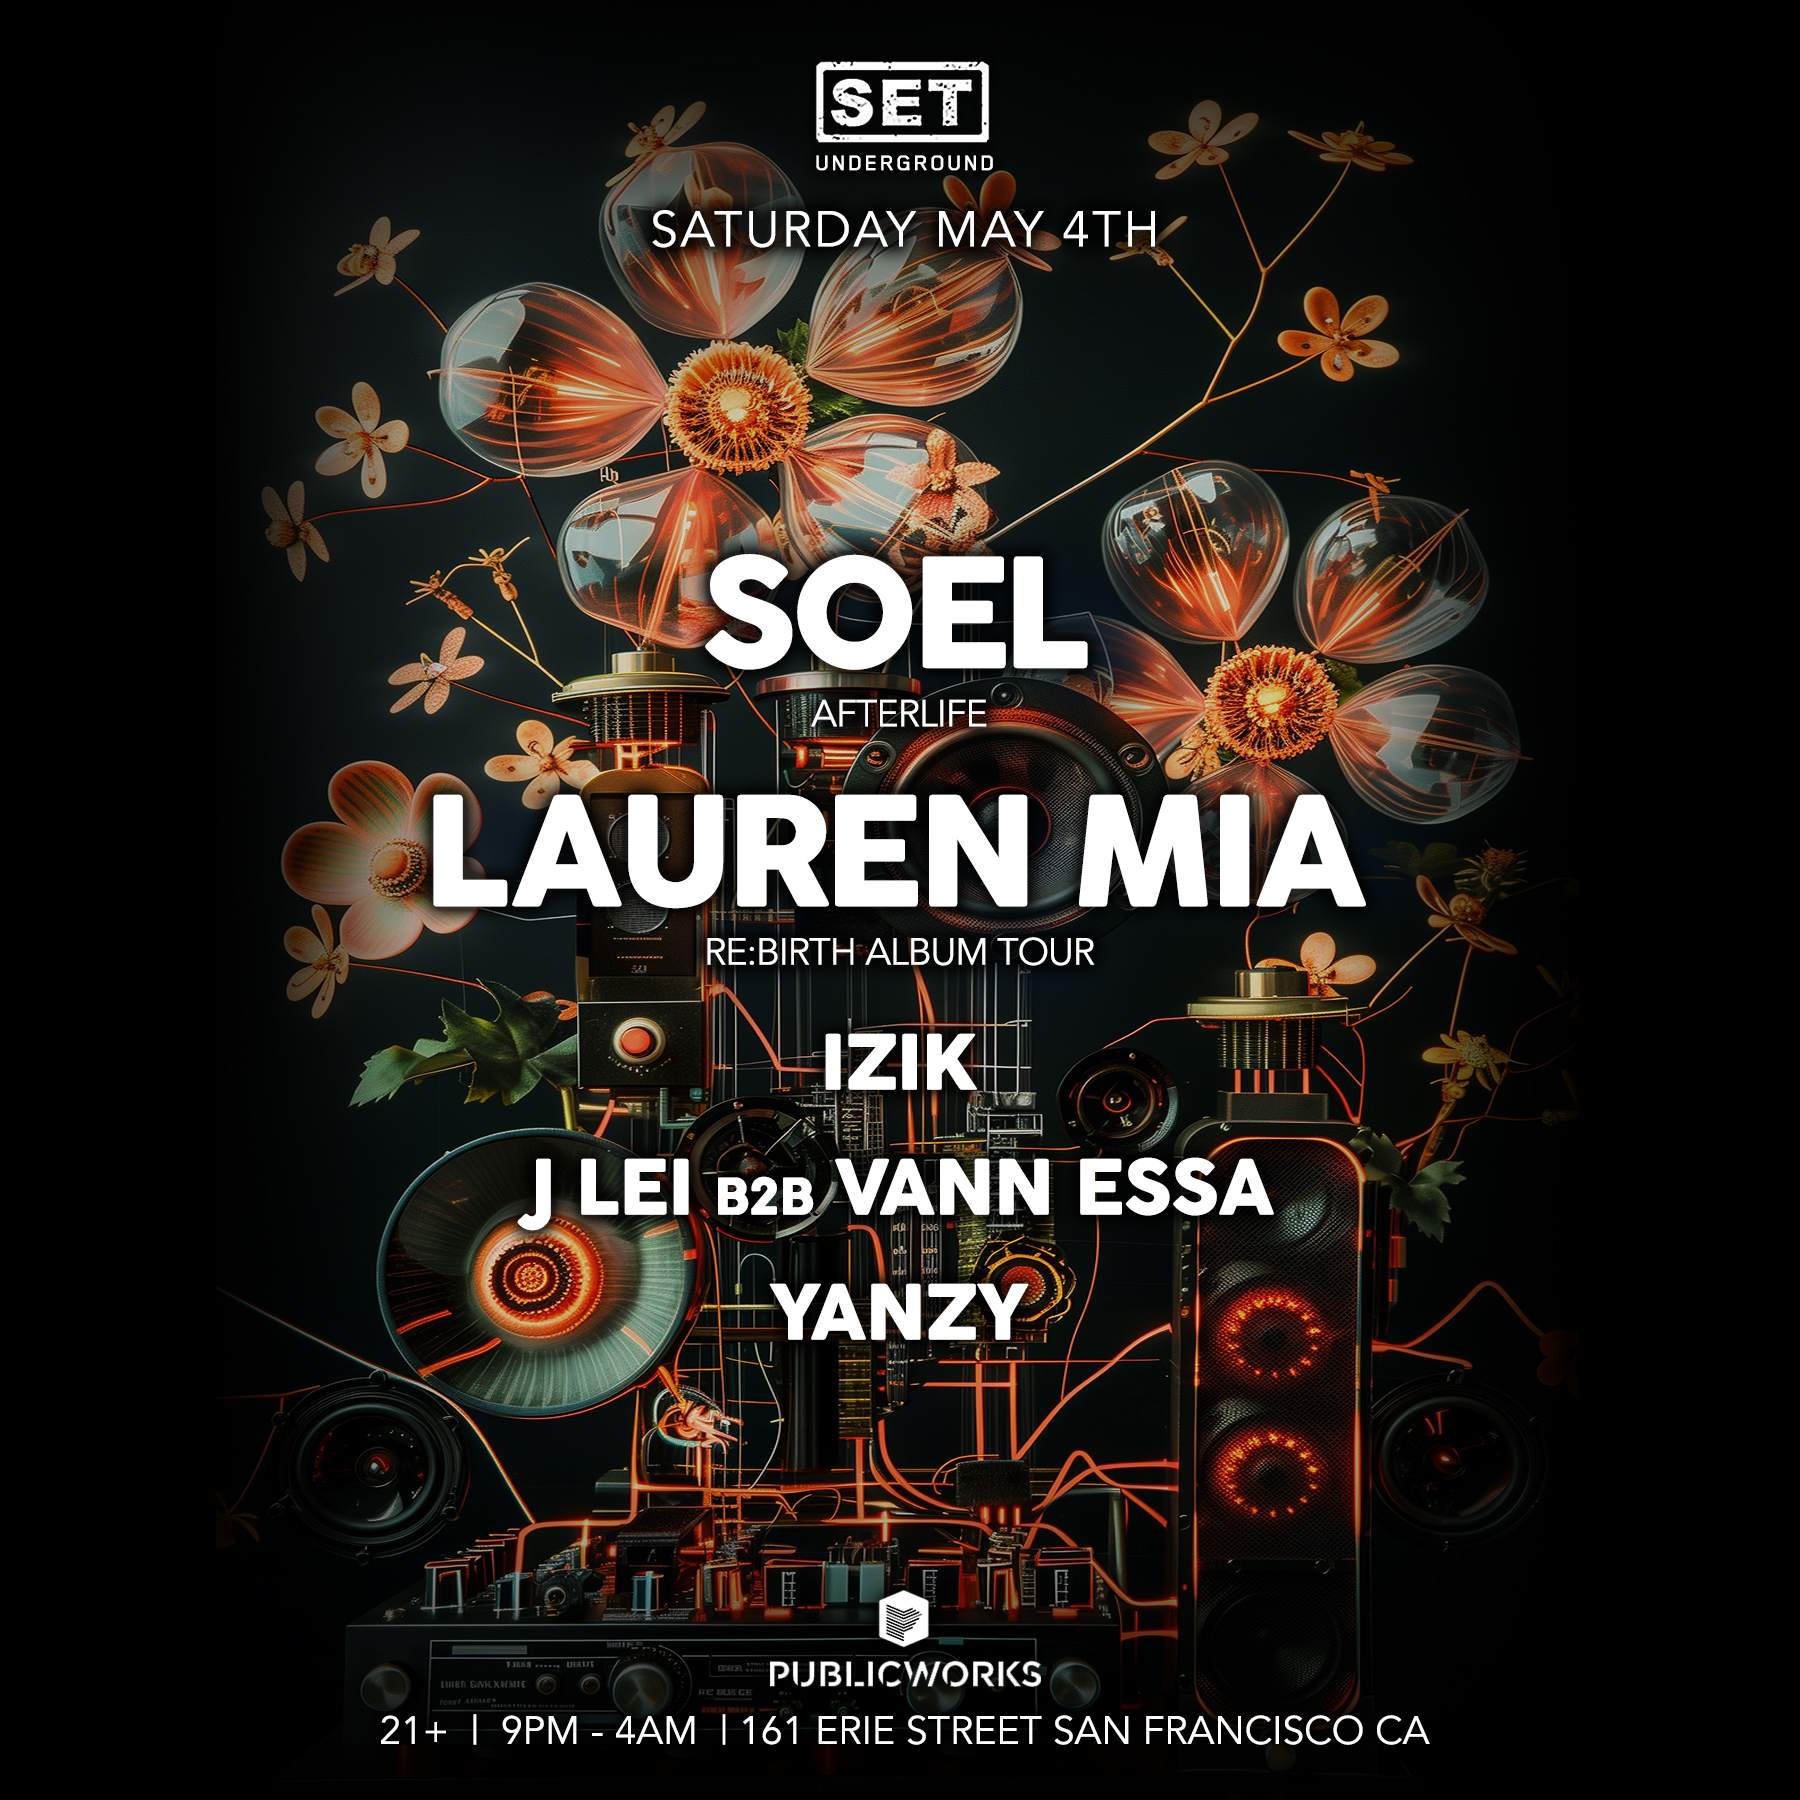 SET with SOEL (Afterlife) + Lauren Mia (Re:Birith Album Tour) in SF - Página frontal